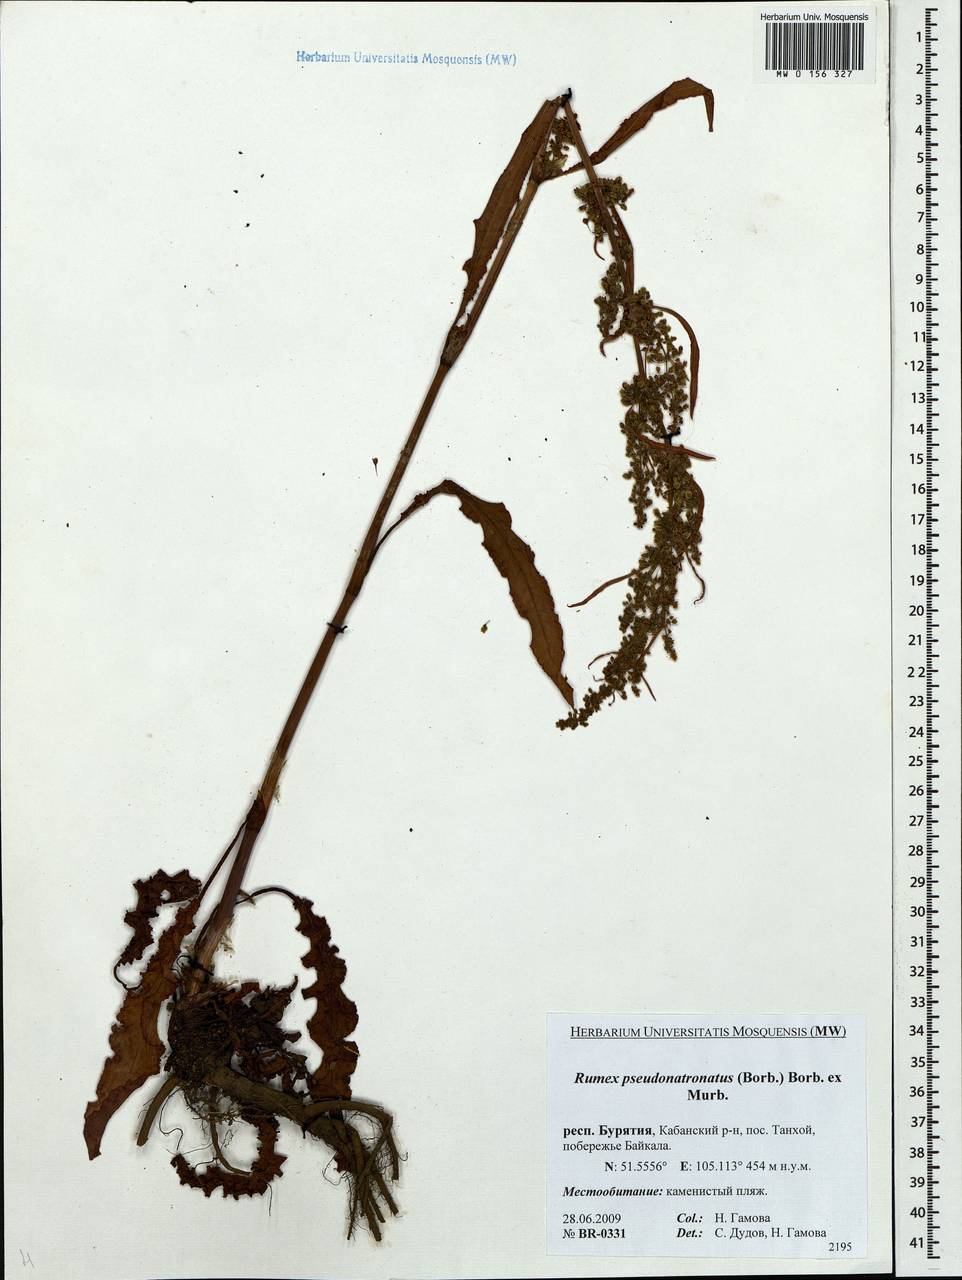 Rumex pseudonatronatus (Borbás) Borbás ex Murb., Siberia, Baikal & Transbaikal region (S4) (Russia)